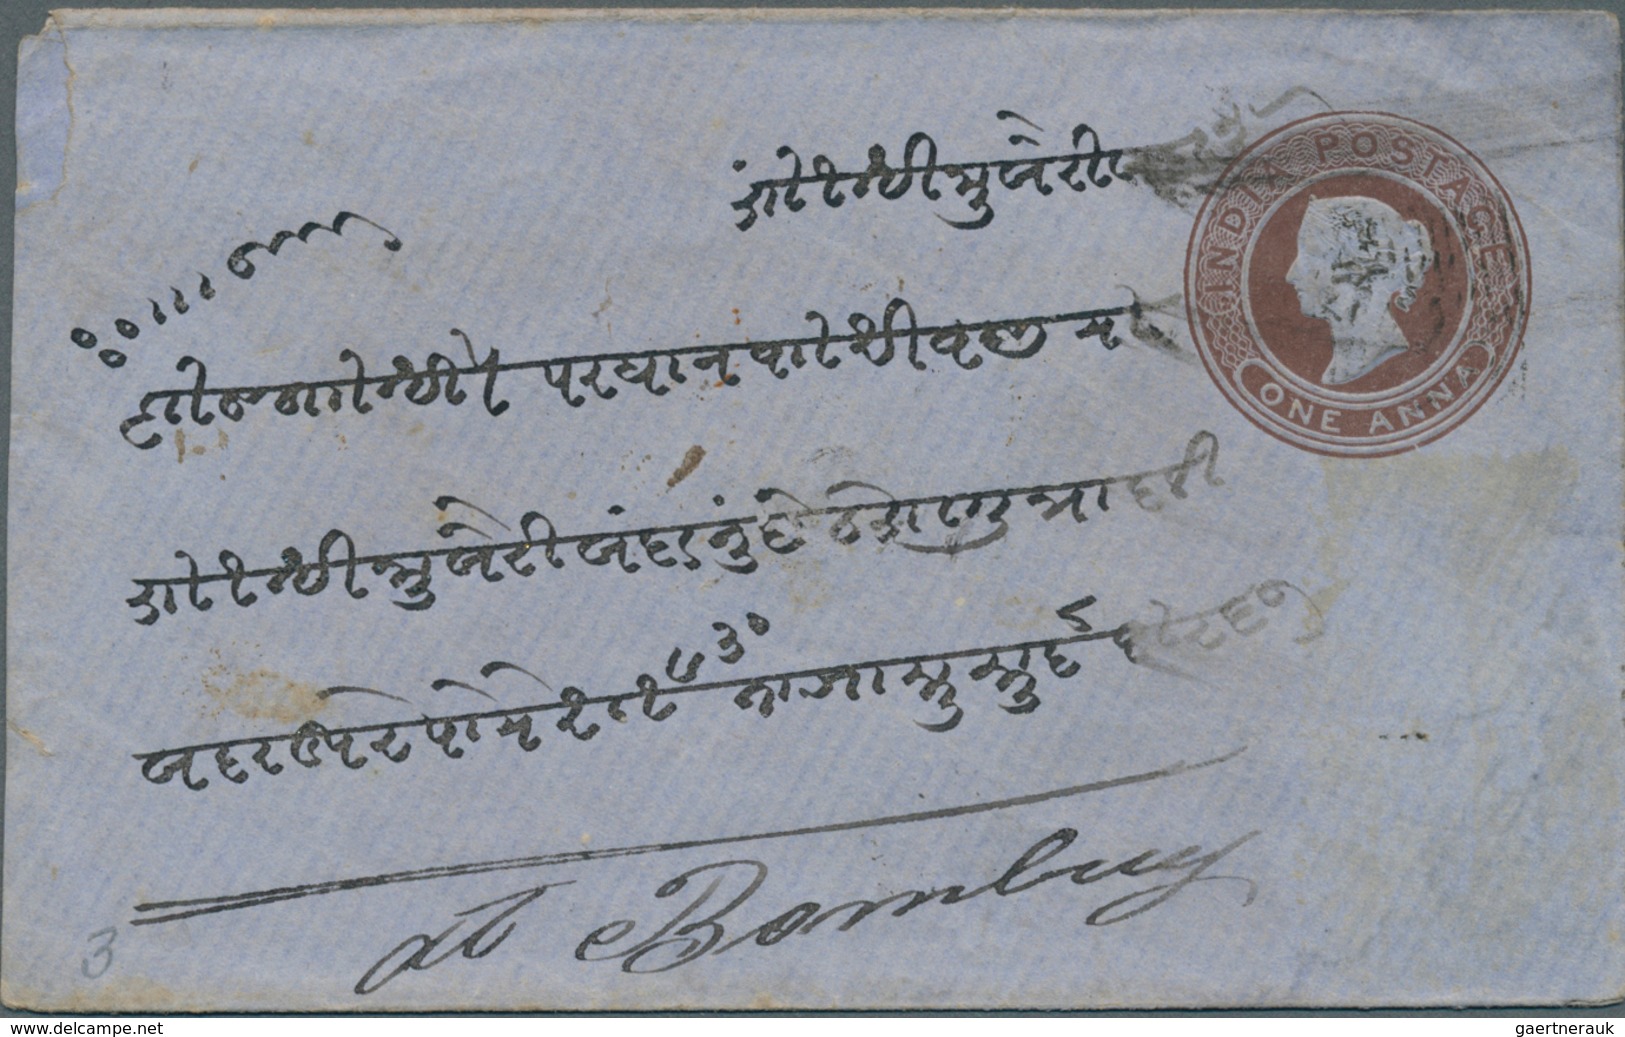 22745 Indien - Ganzsachen: 1850's-1970's ca.: Collection of Indian postal stationery envelopes, letter she